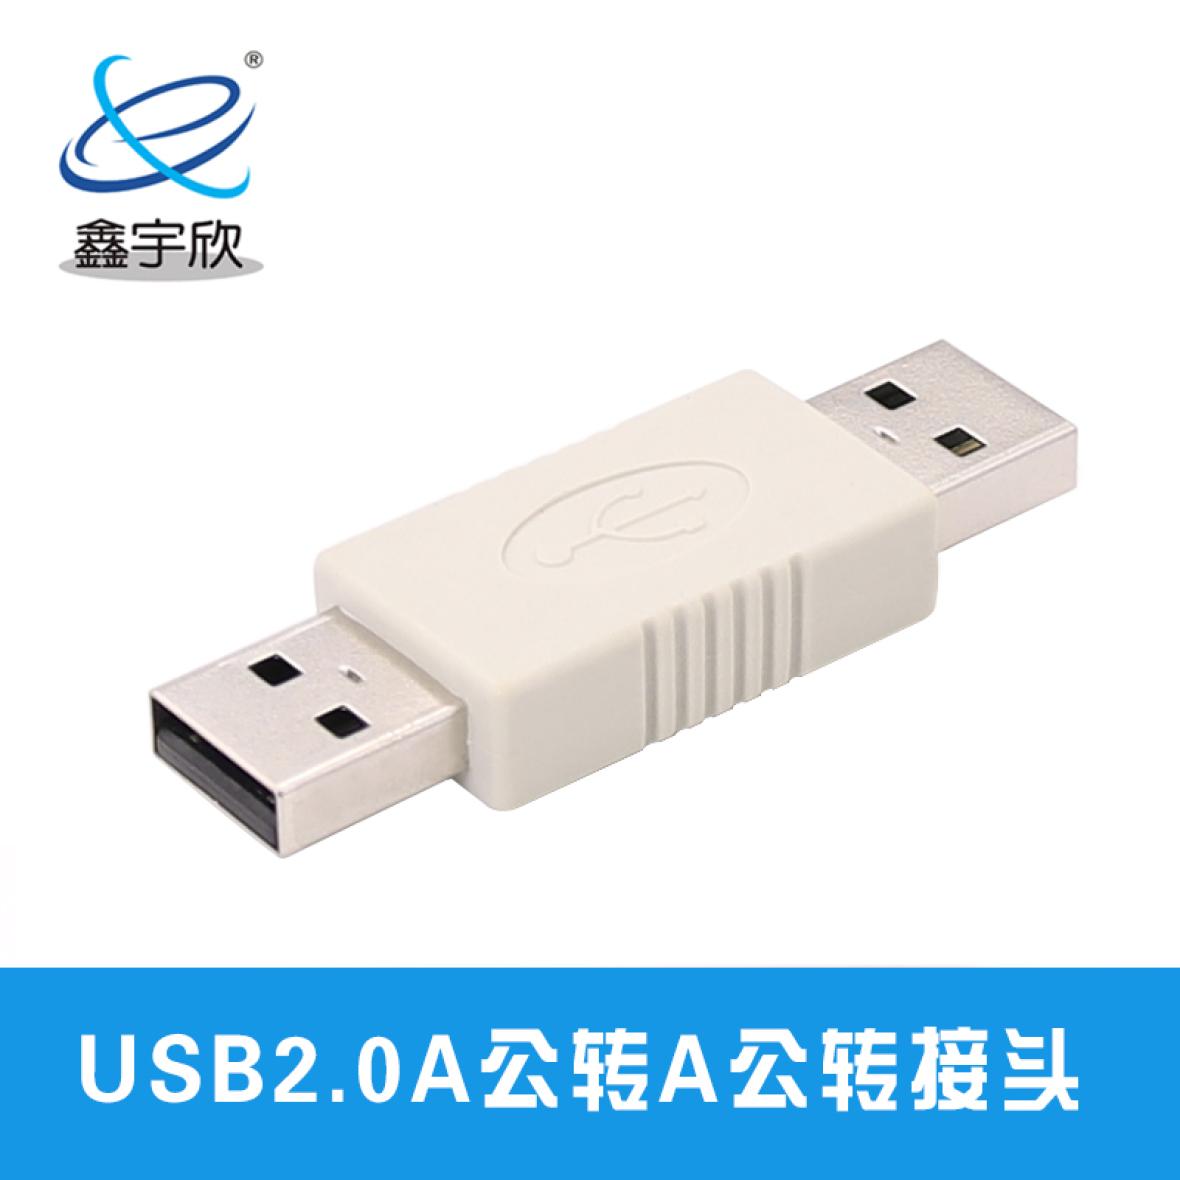  USB2.0A公对A公转接头